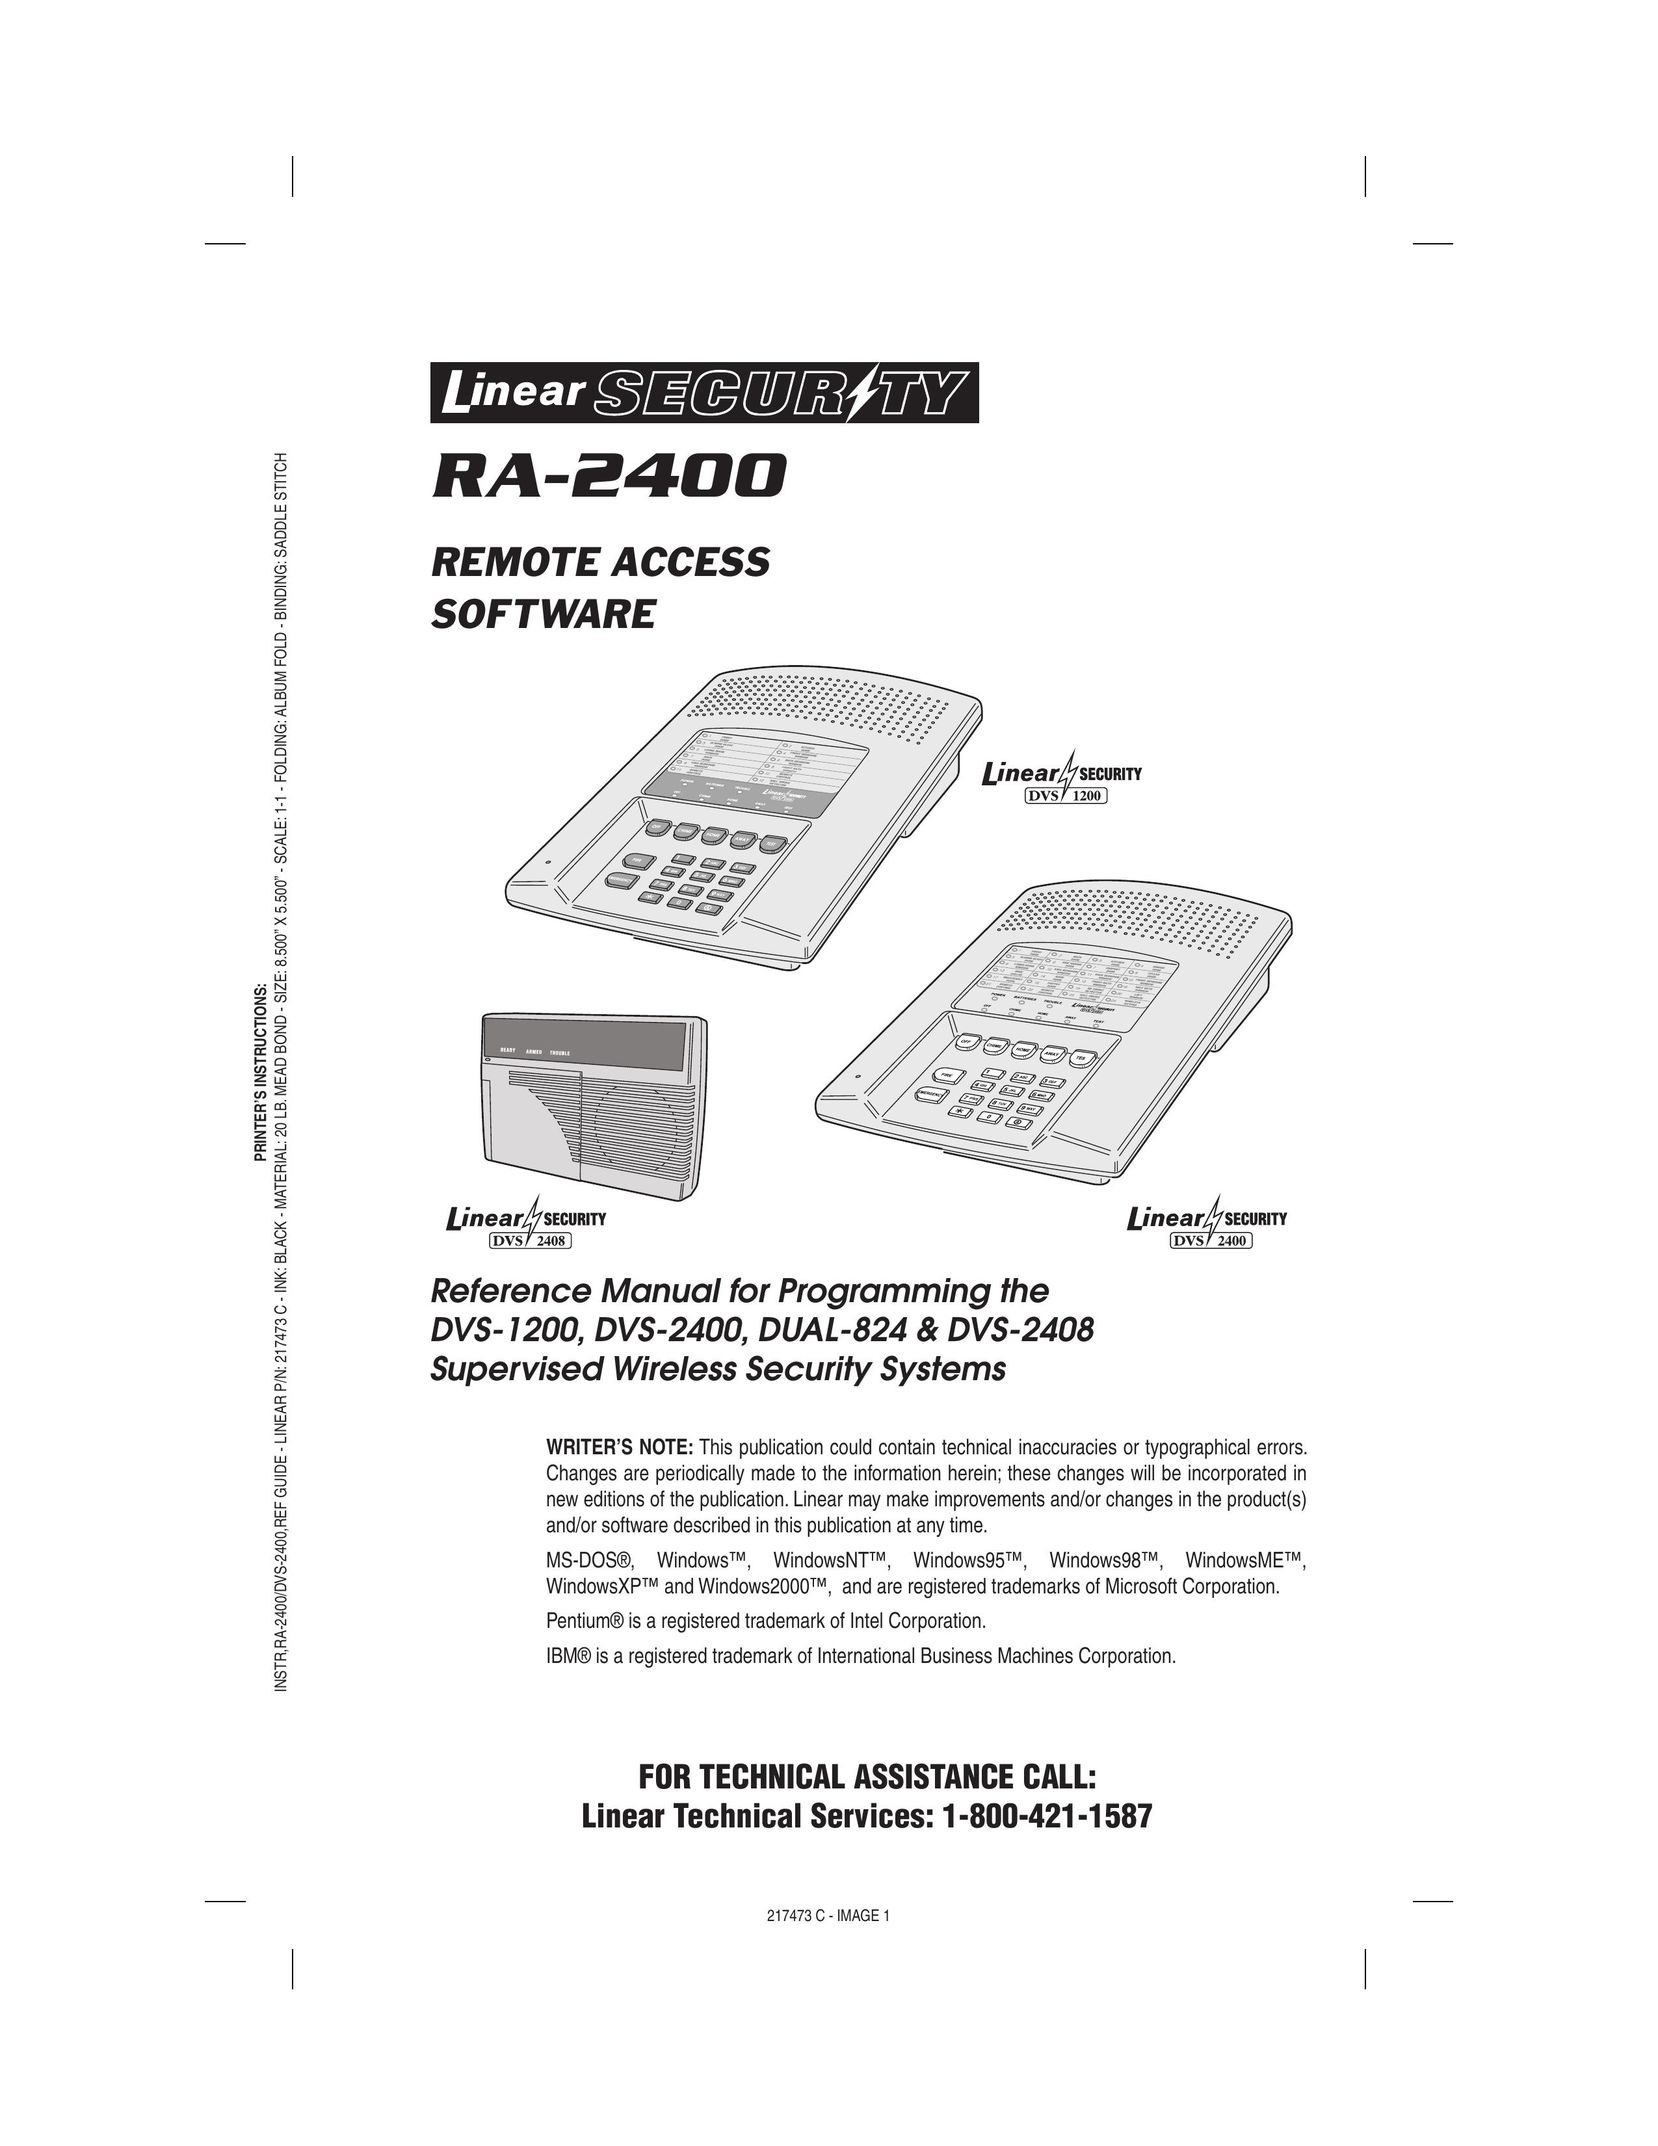 Linear DVS-1200 Food Processor User Manual